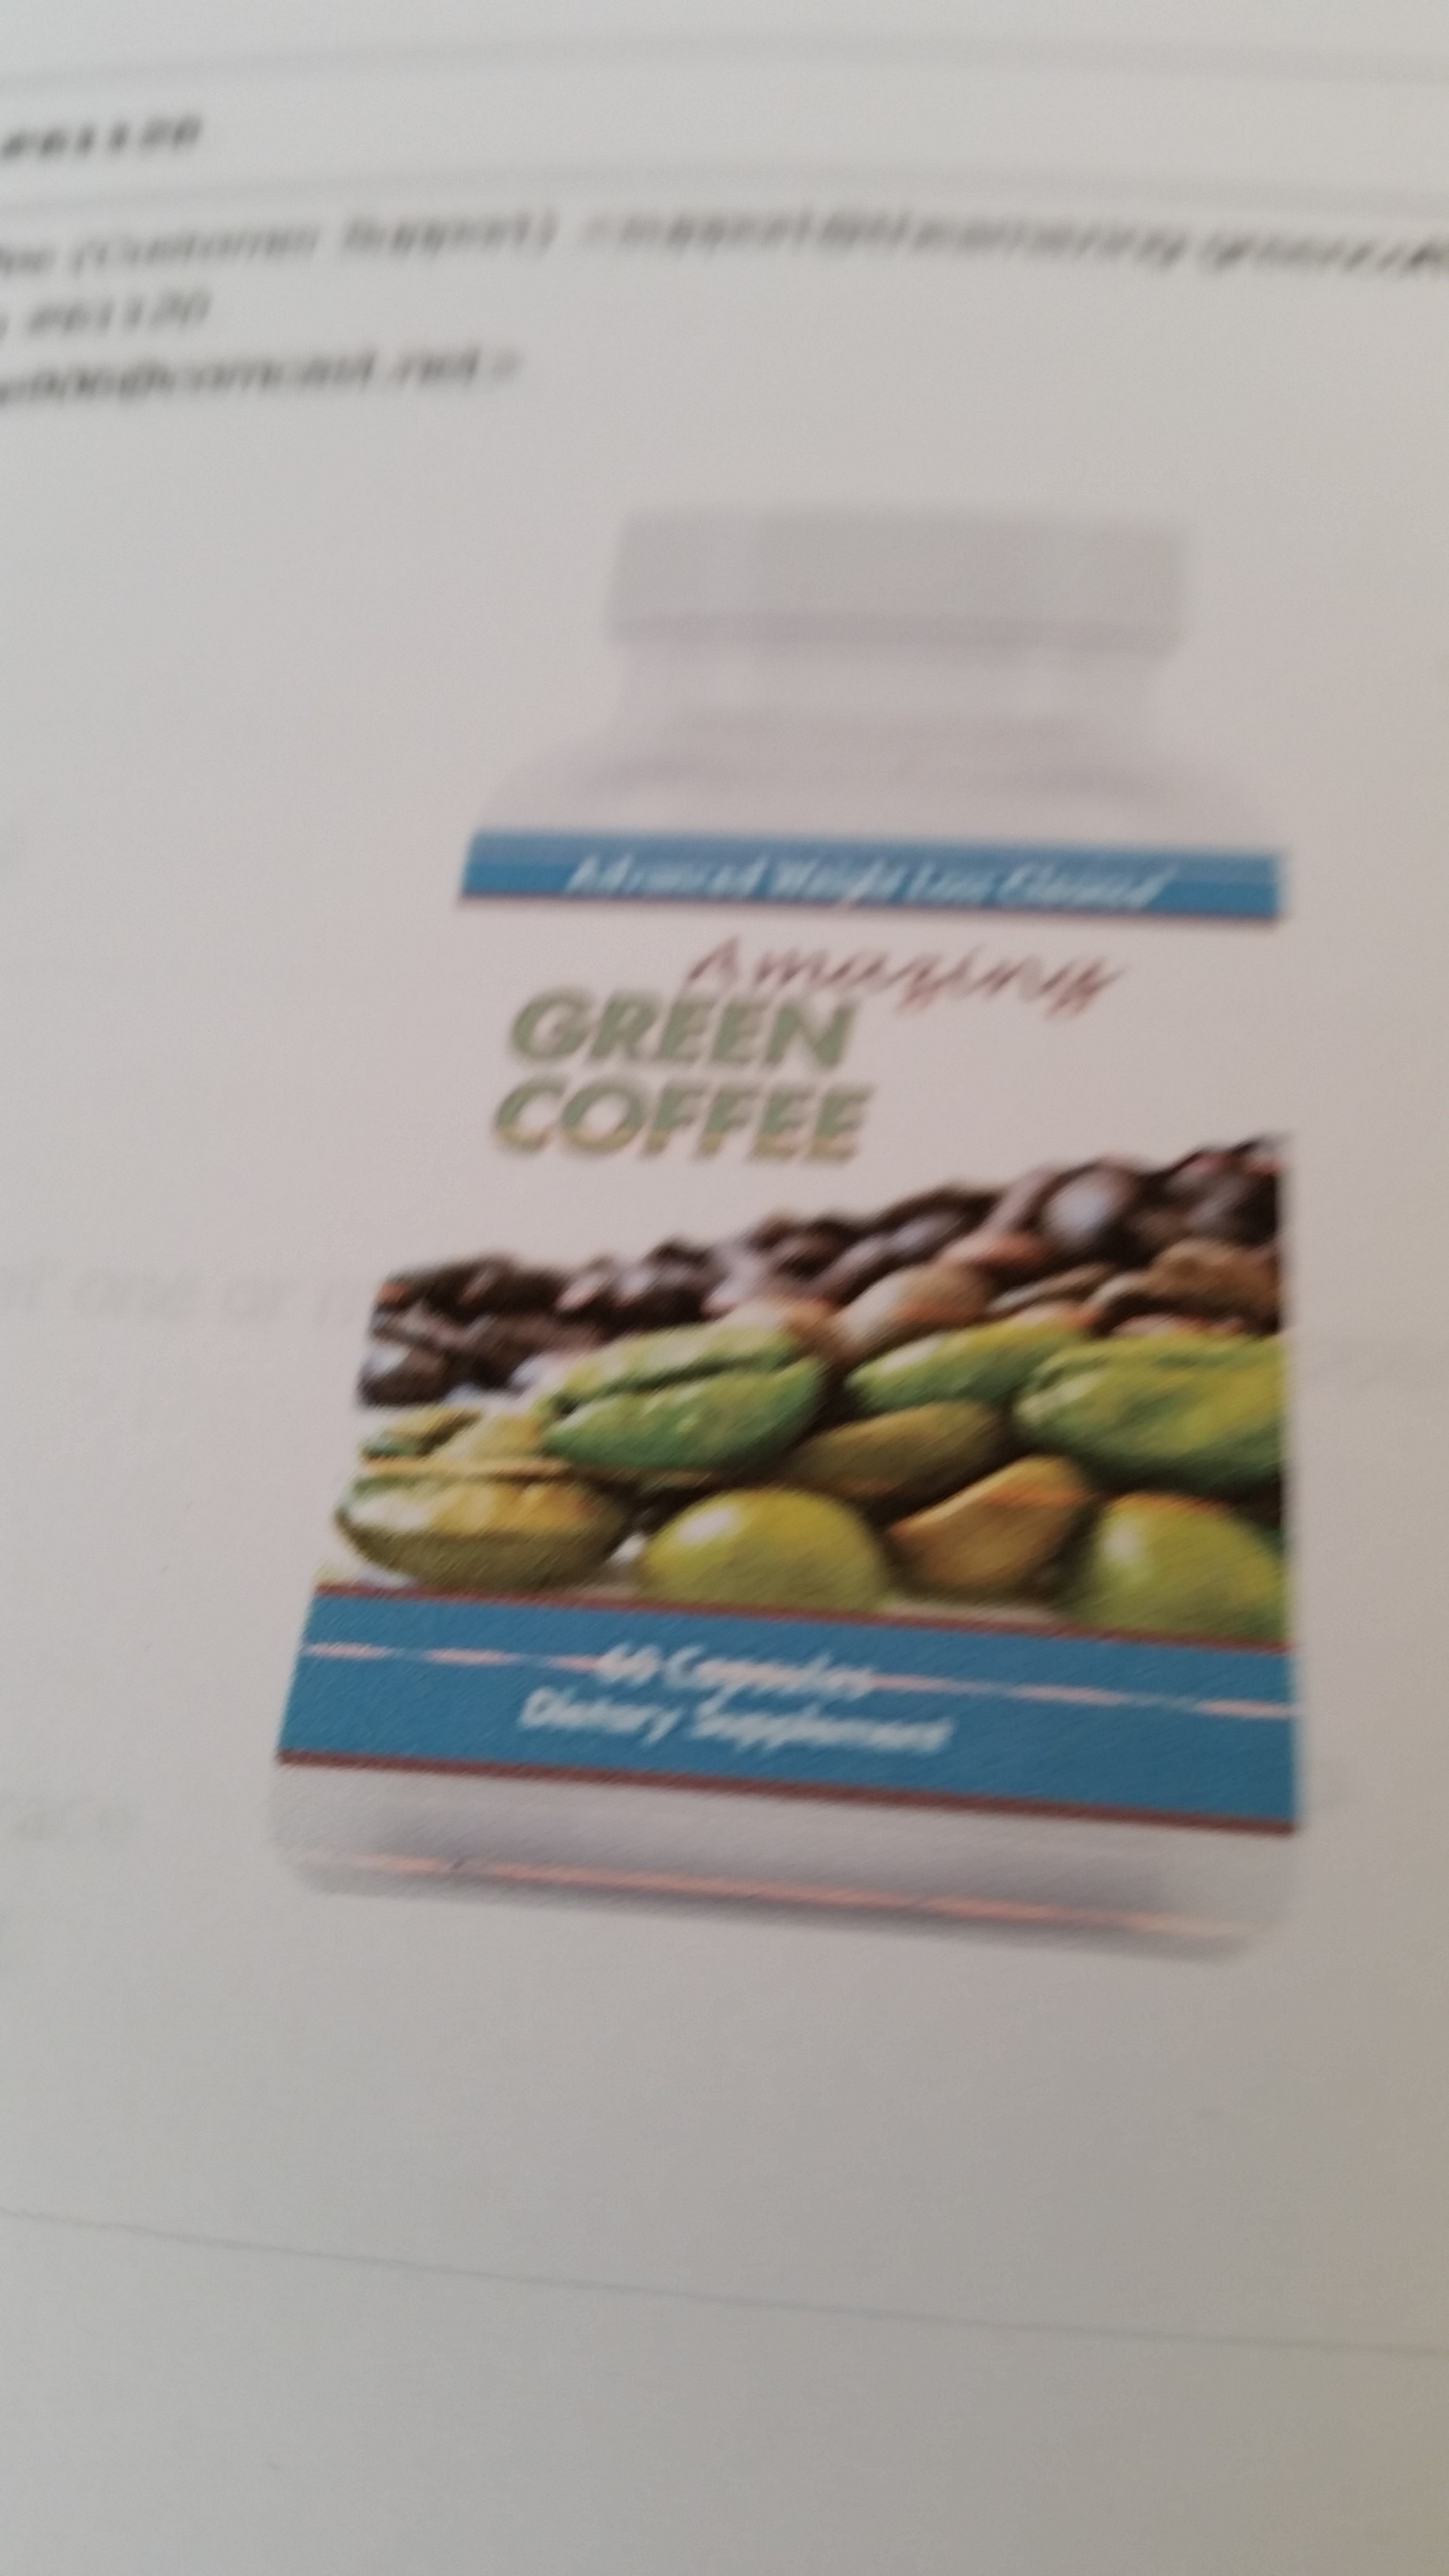 Amazing Green Coffee pill bottle